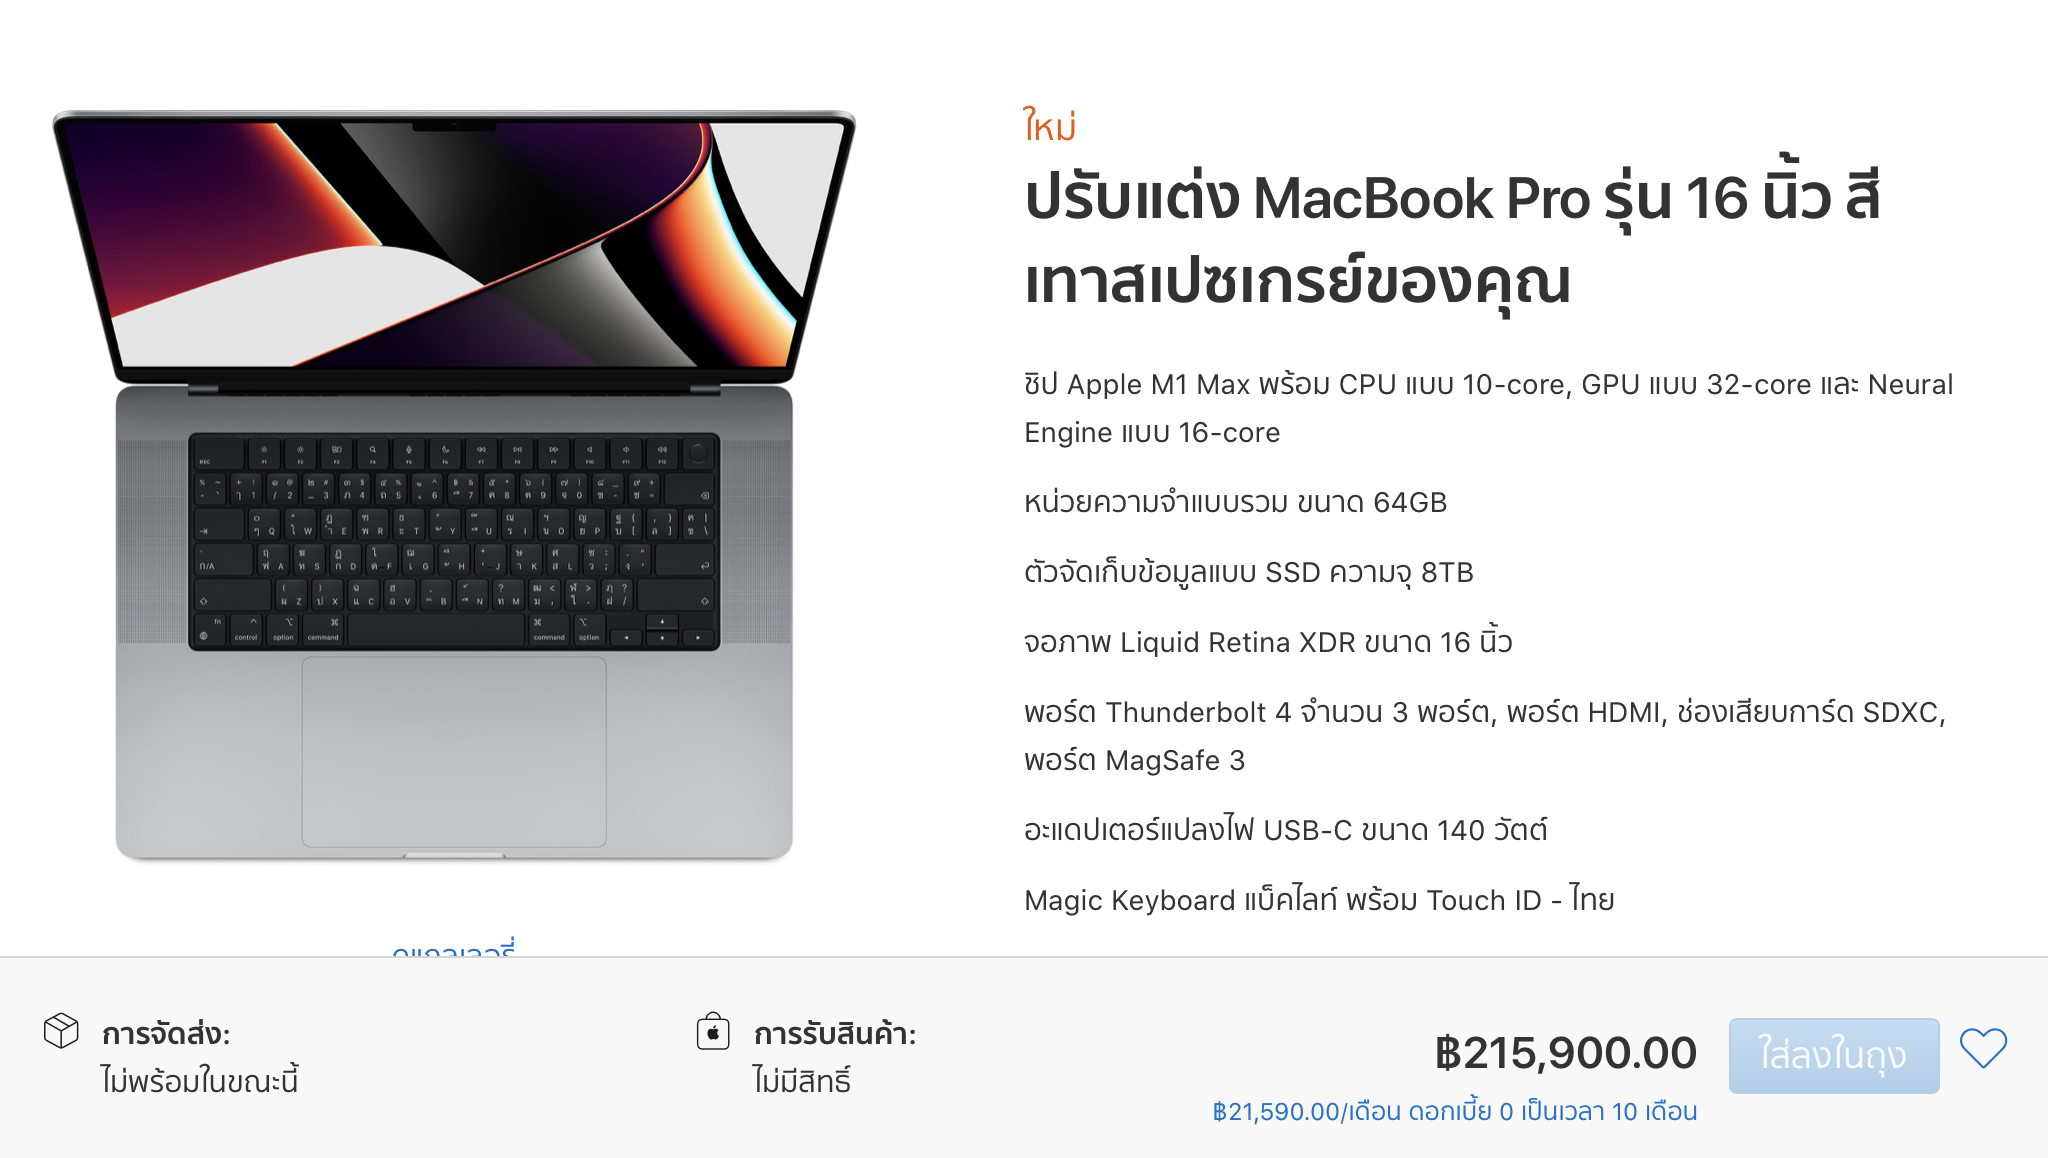 alt="MacBook Pro"